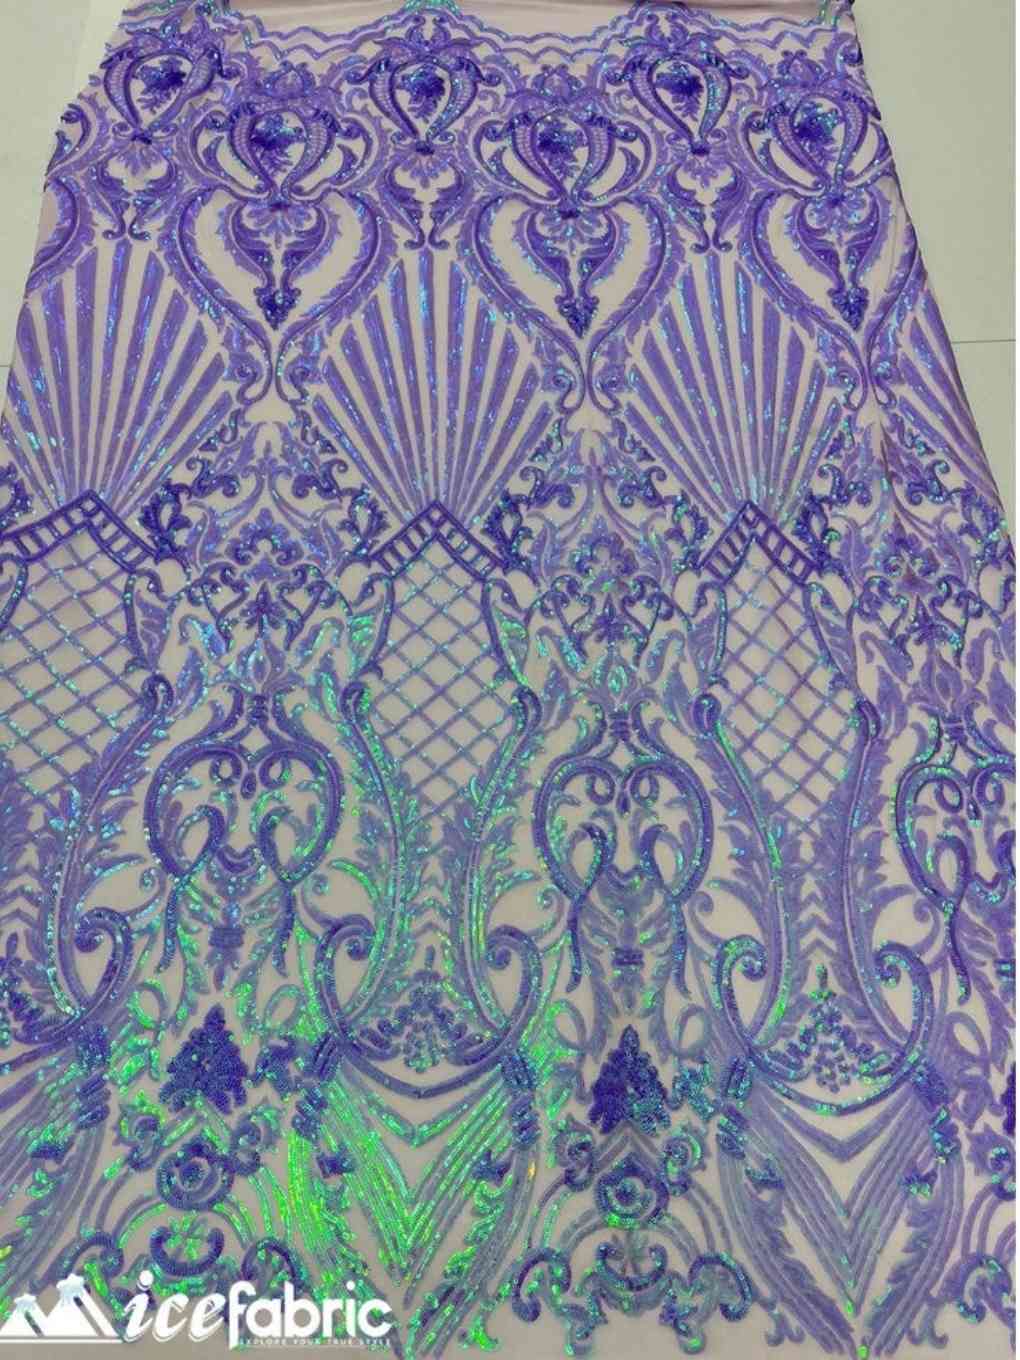 Diba Lavender Geometric Stretch Sequin Fabric / Lace FabricICE FABRICSICE FABRICSDiba Sequin Fabric LavenderBy The Yard (58" Wide)Diba Lavender Geometric Stretch Sequin Fabric / Lace Fabric ICE FABRICS